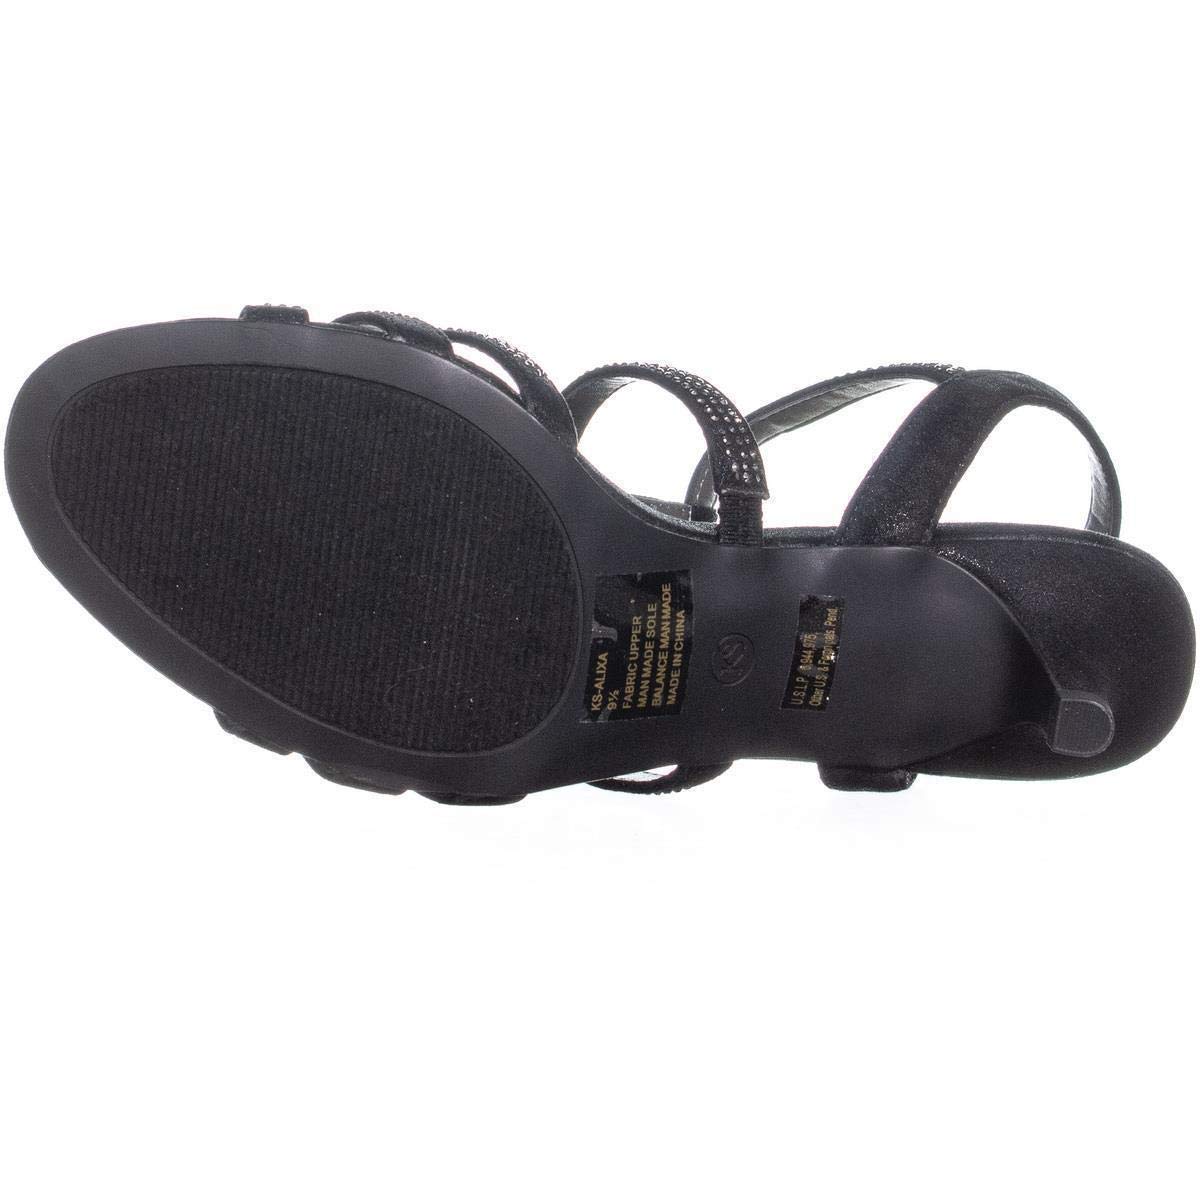 Karen Scott Alixa Women's Sandals & Flip Flops Black Size 8.5 M, Black ...